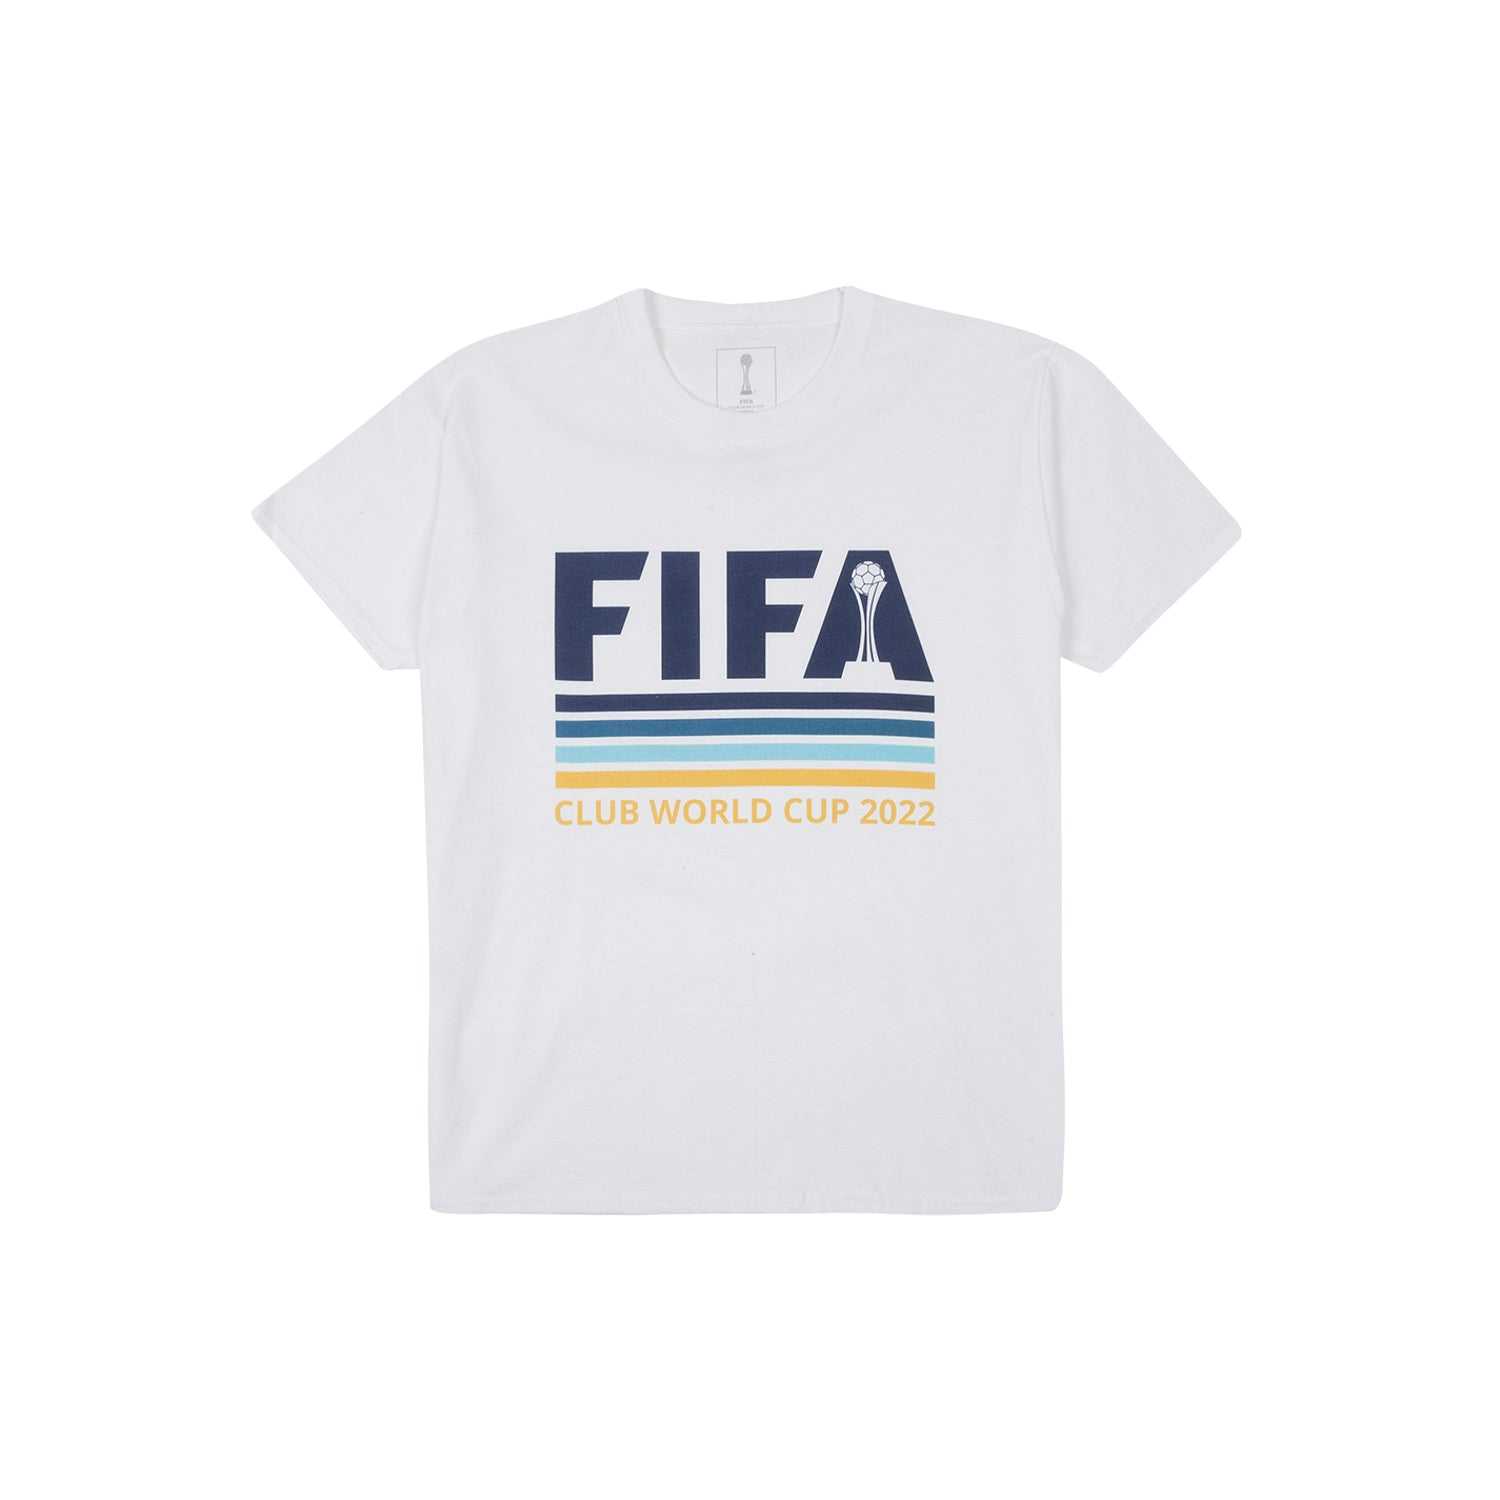 FIFA Club World Cup 2022 White T-Shirt - Men's